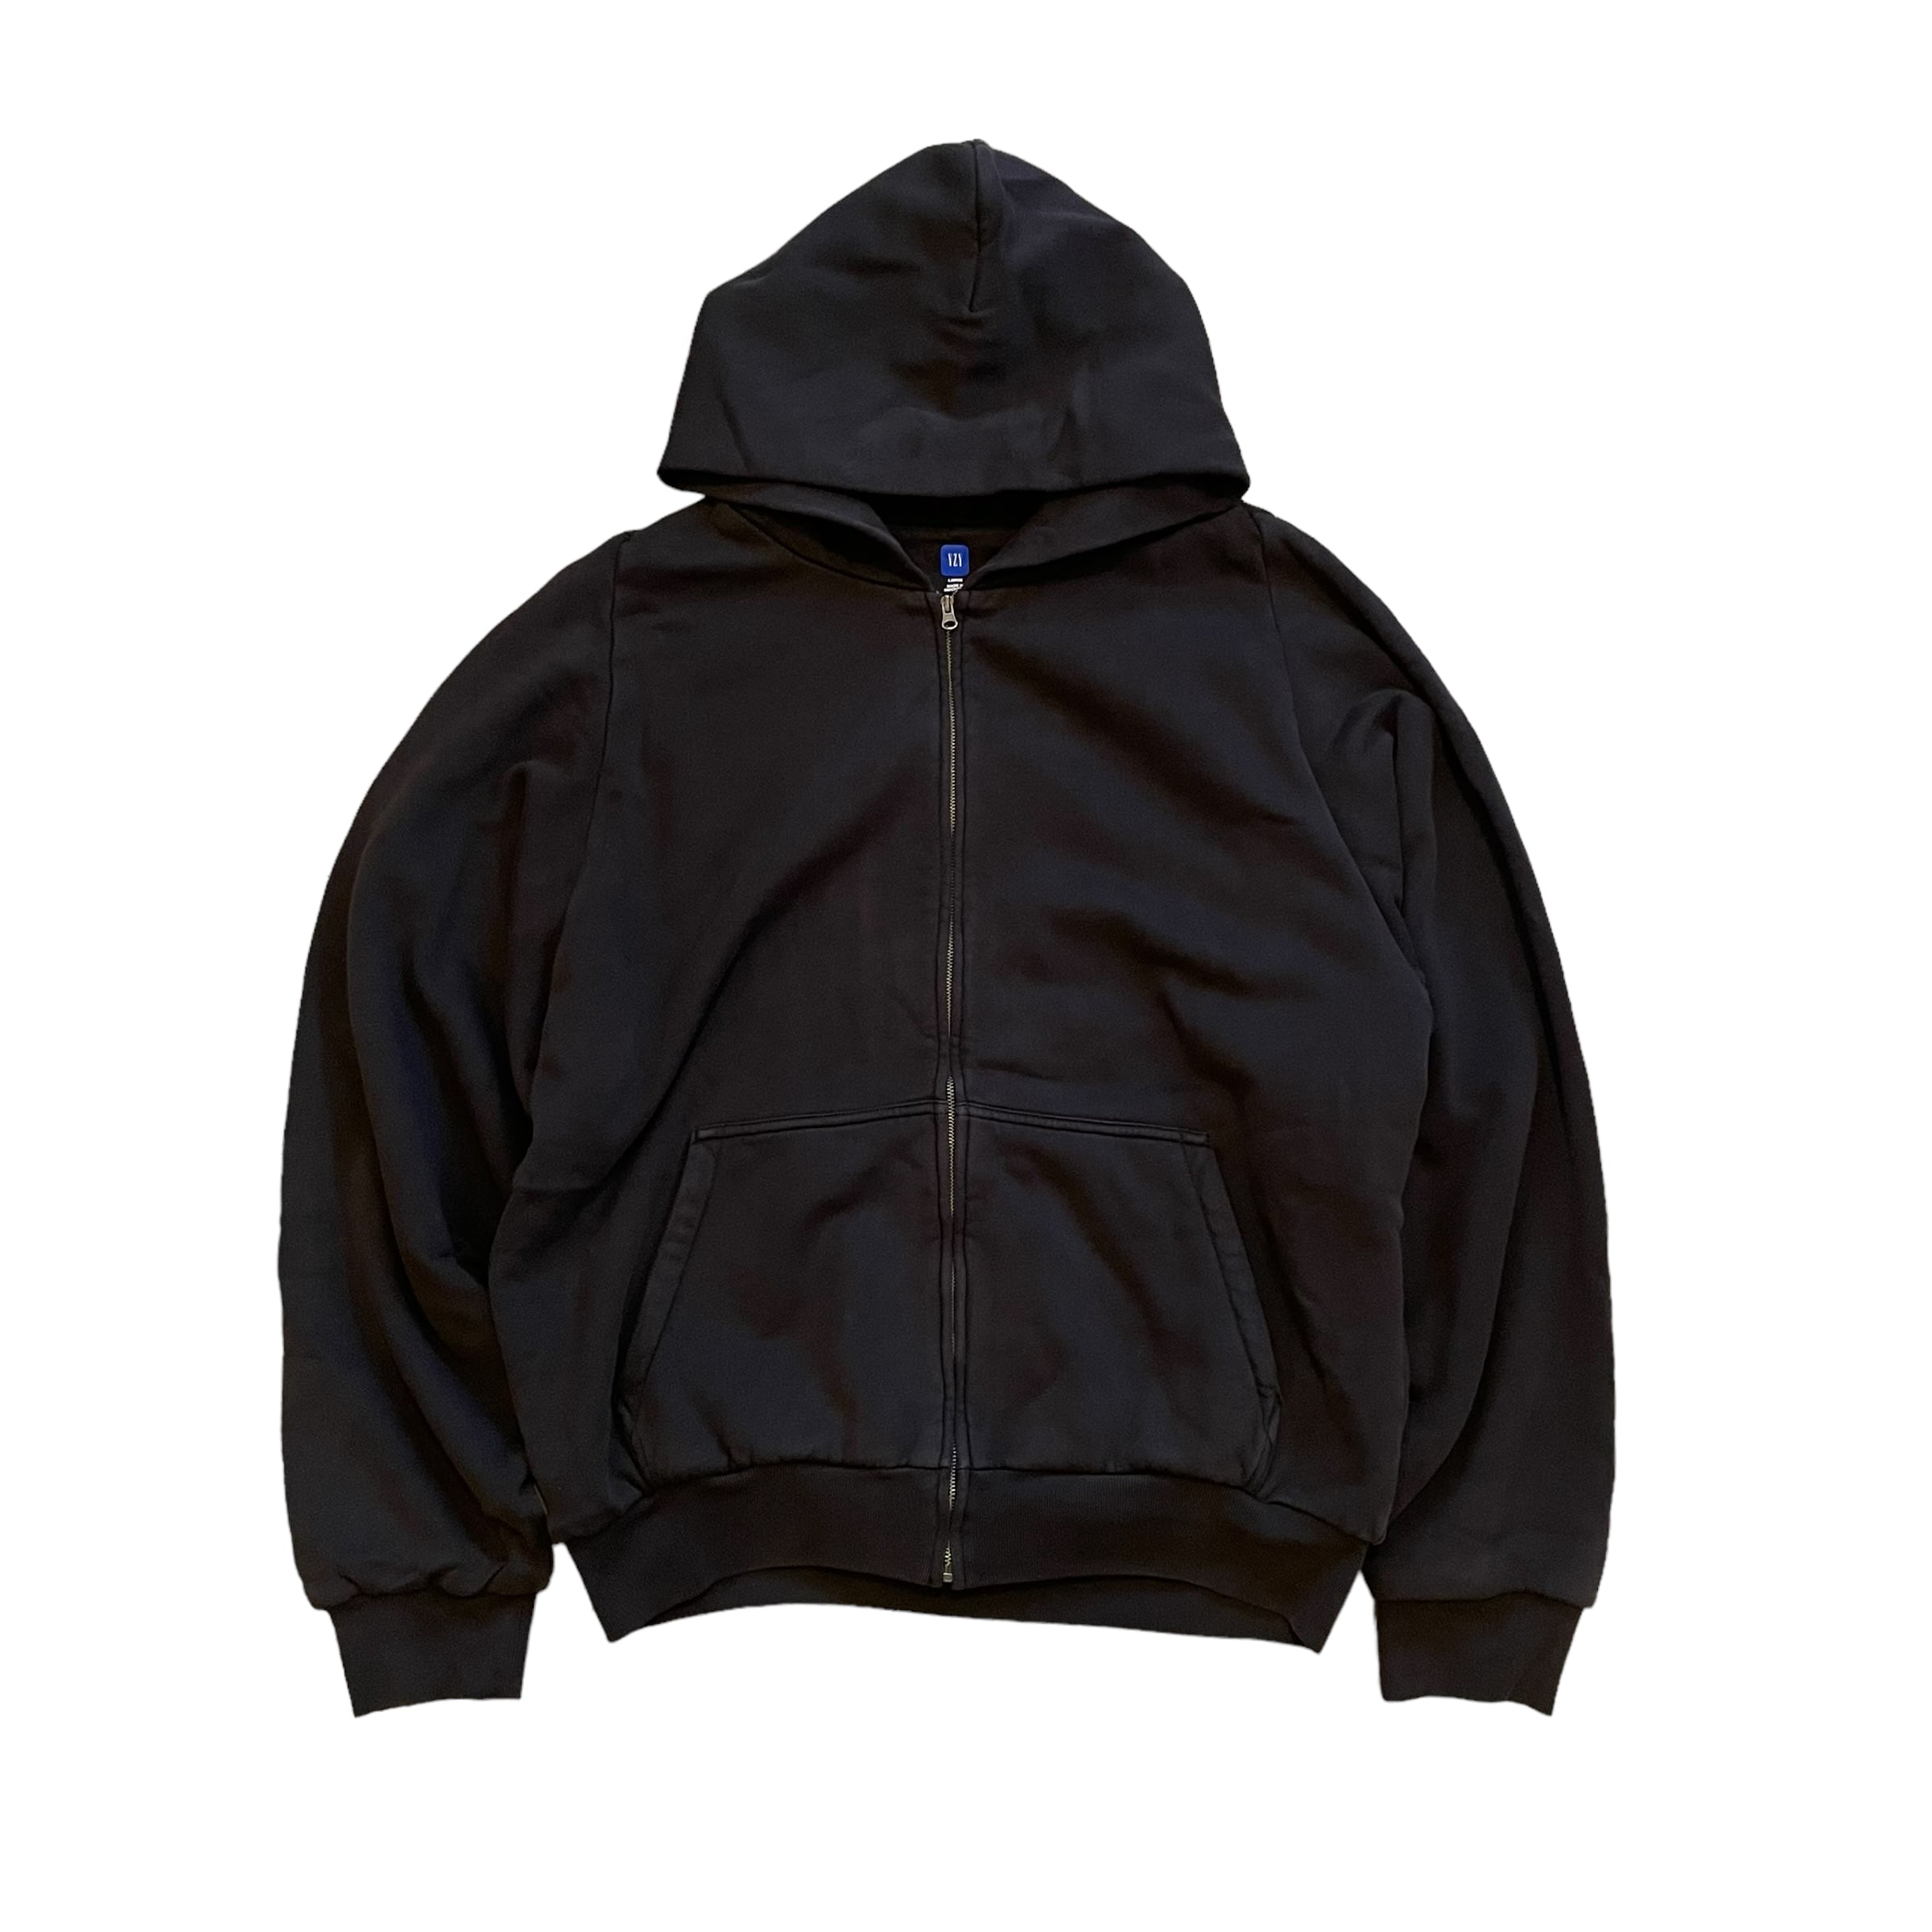 Yeezy Gap zip up hoodie poetic black身幅61センチ - パーカー